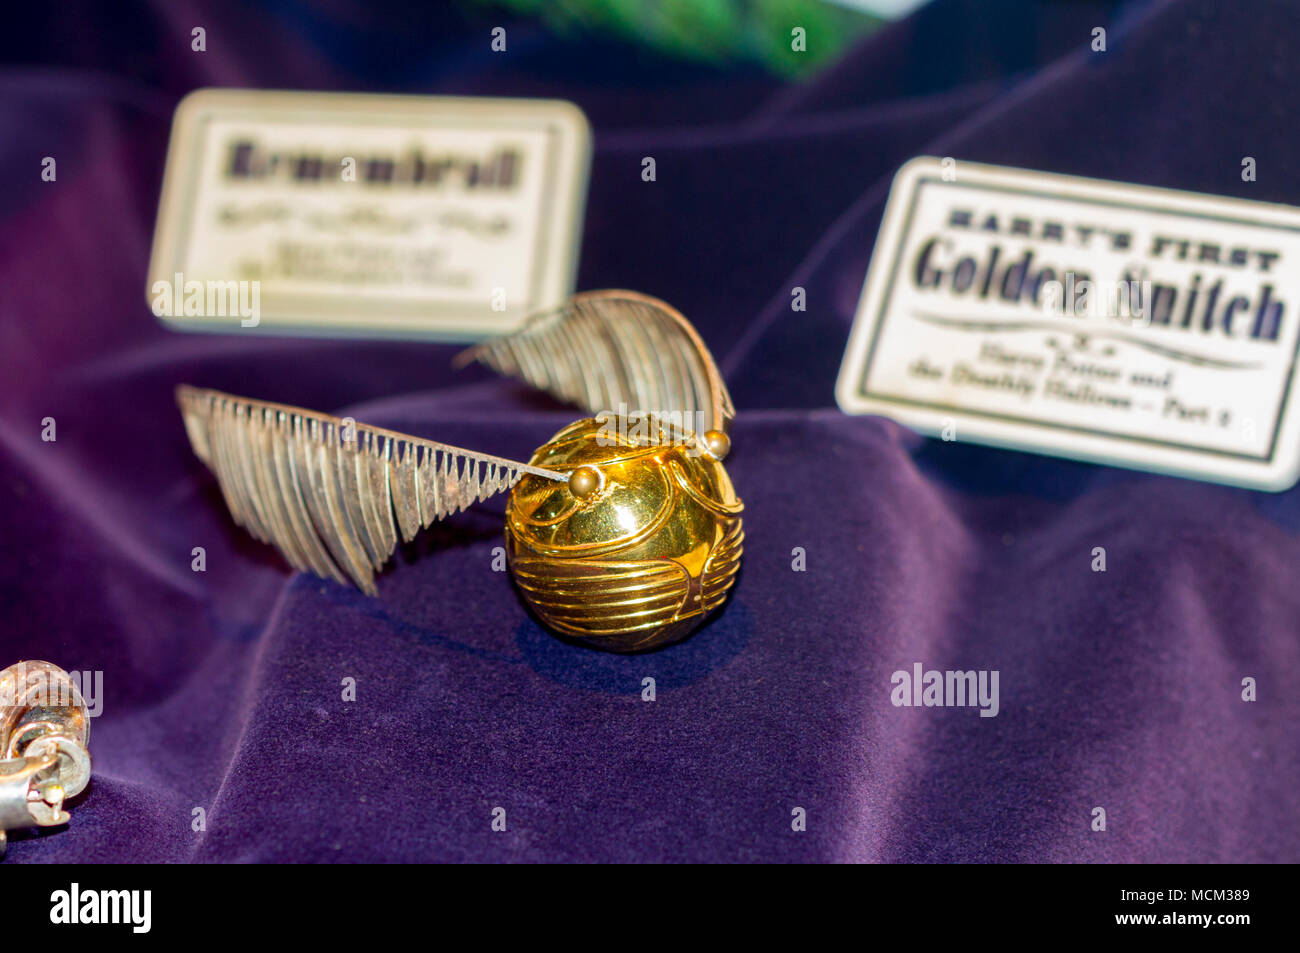 Snitch dorada harry potter fotografías e imágenes de alta resolución - Alamy